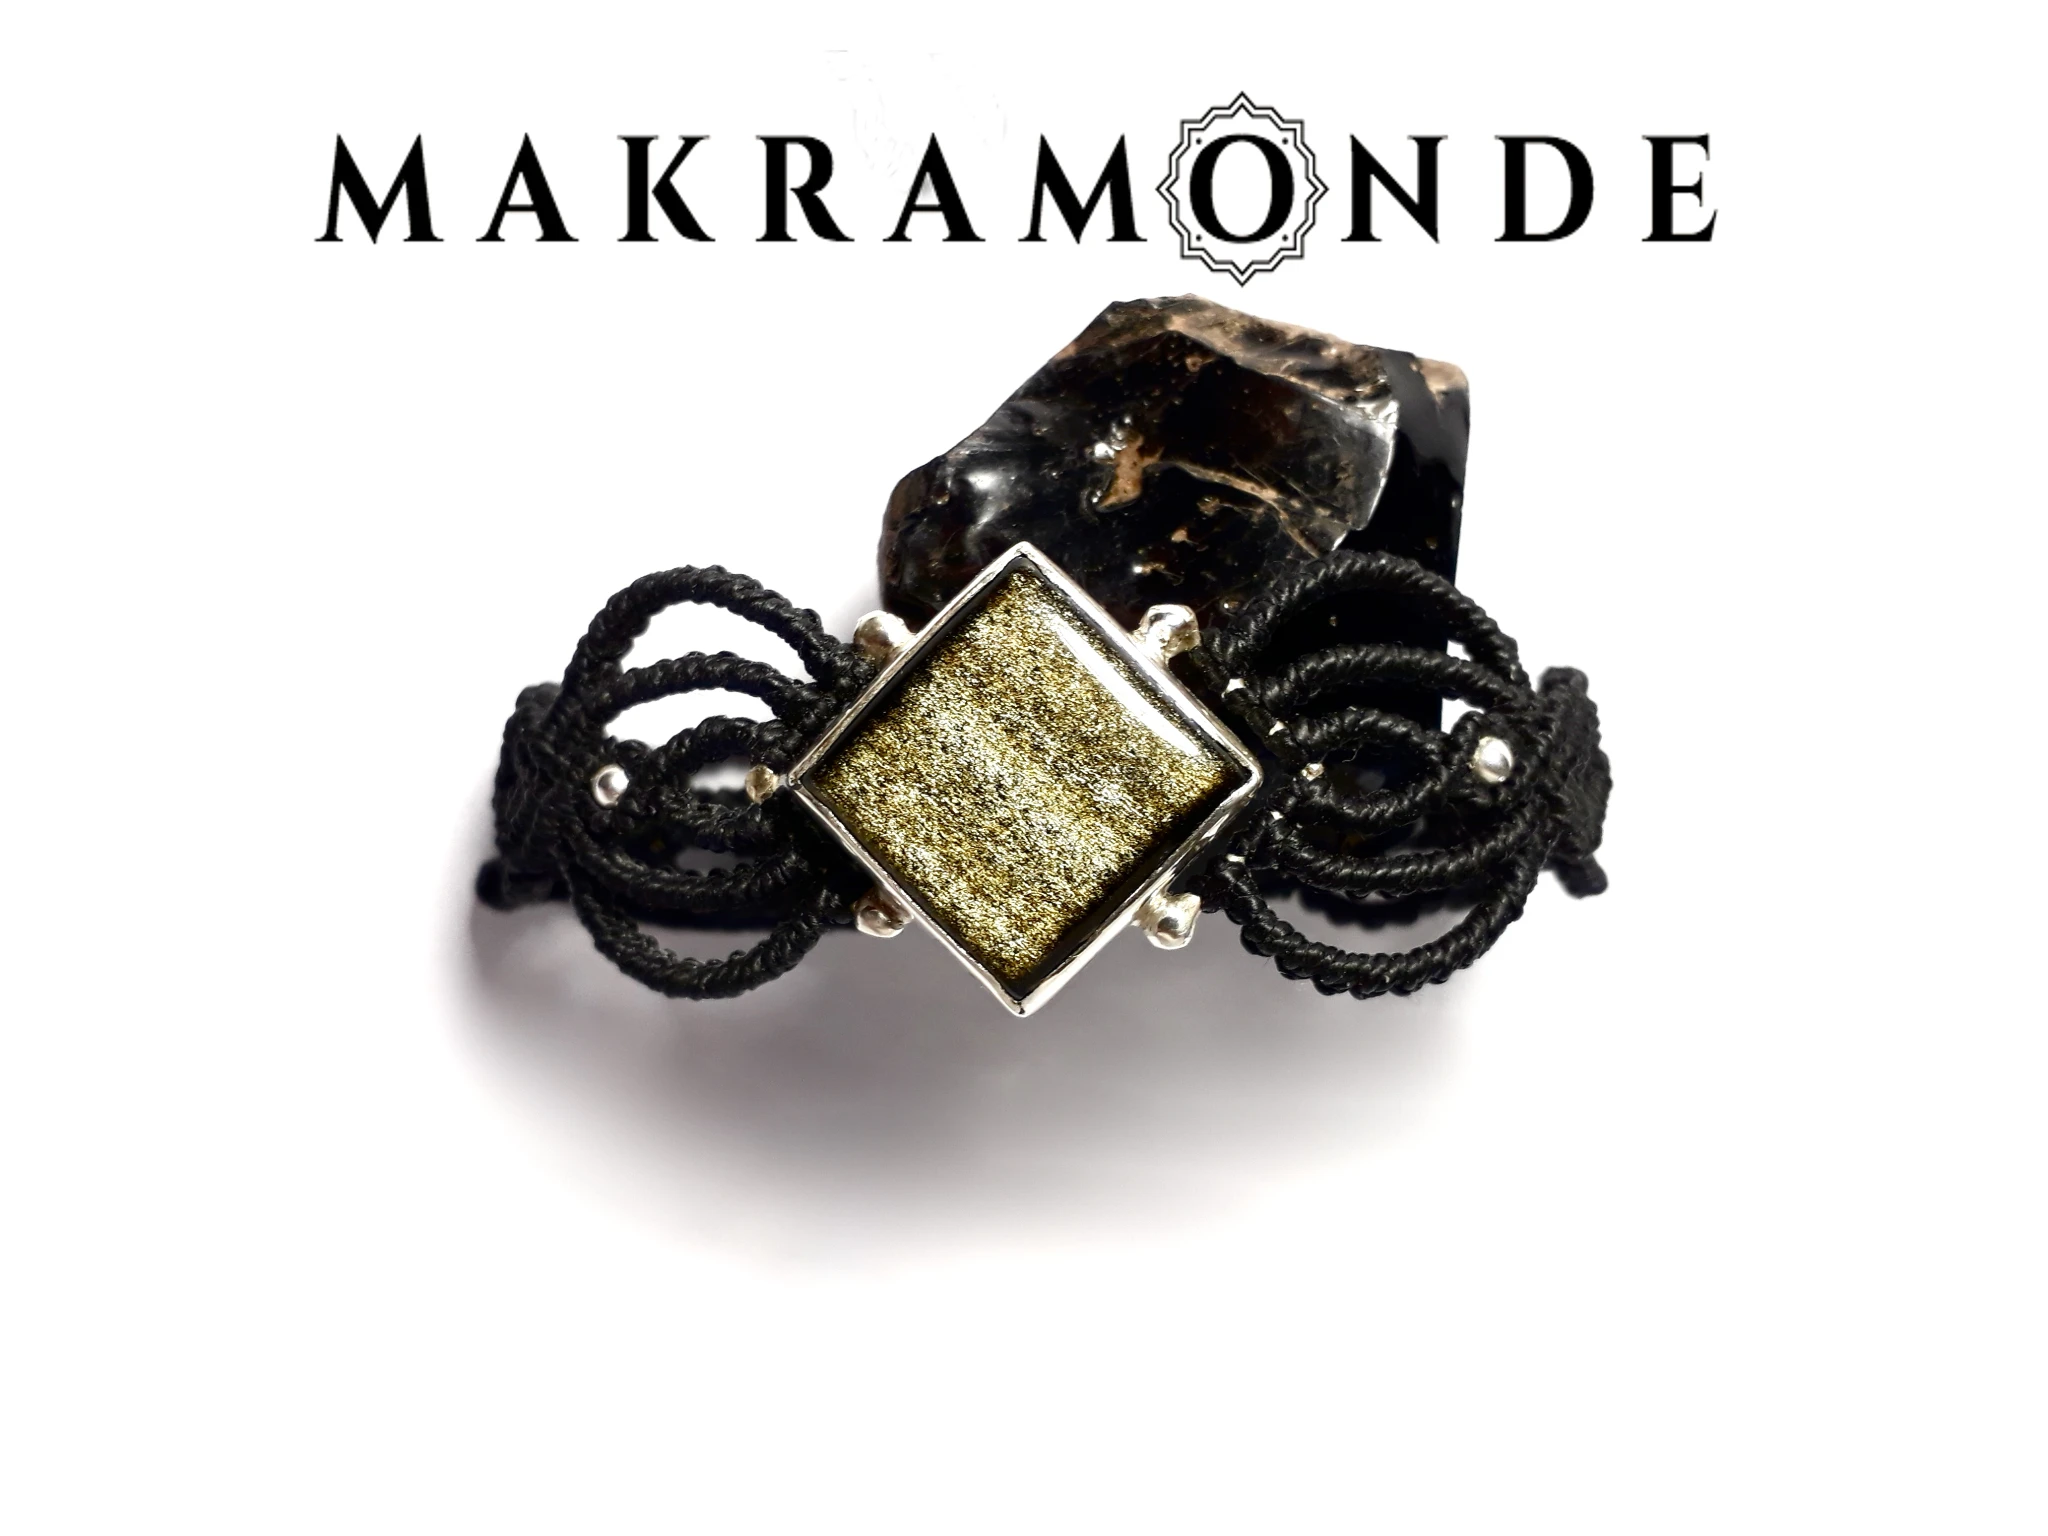 Makramonde logo et exemple de bijou